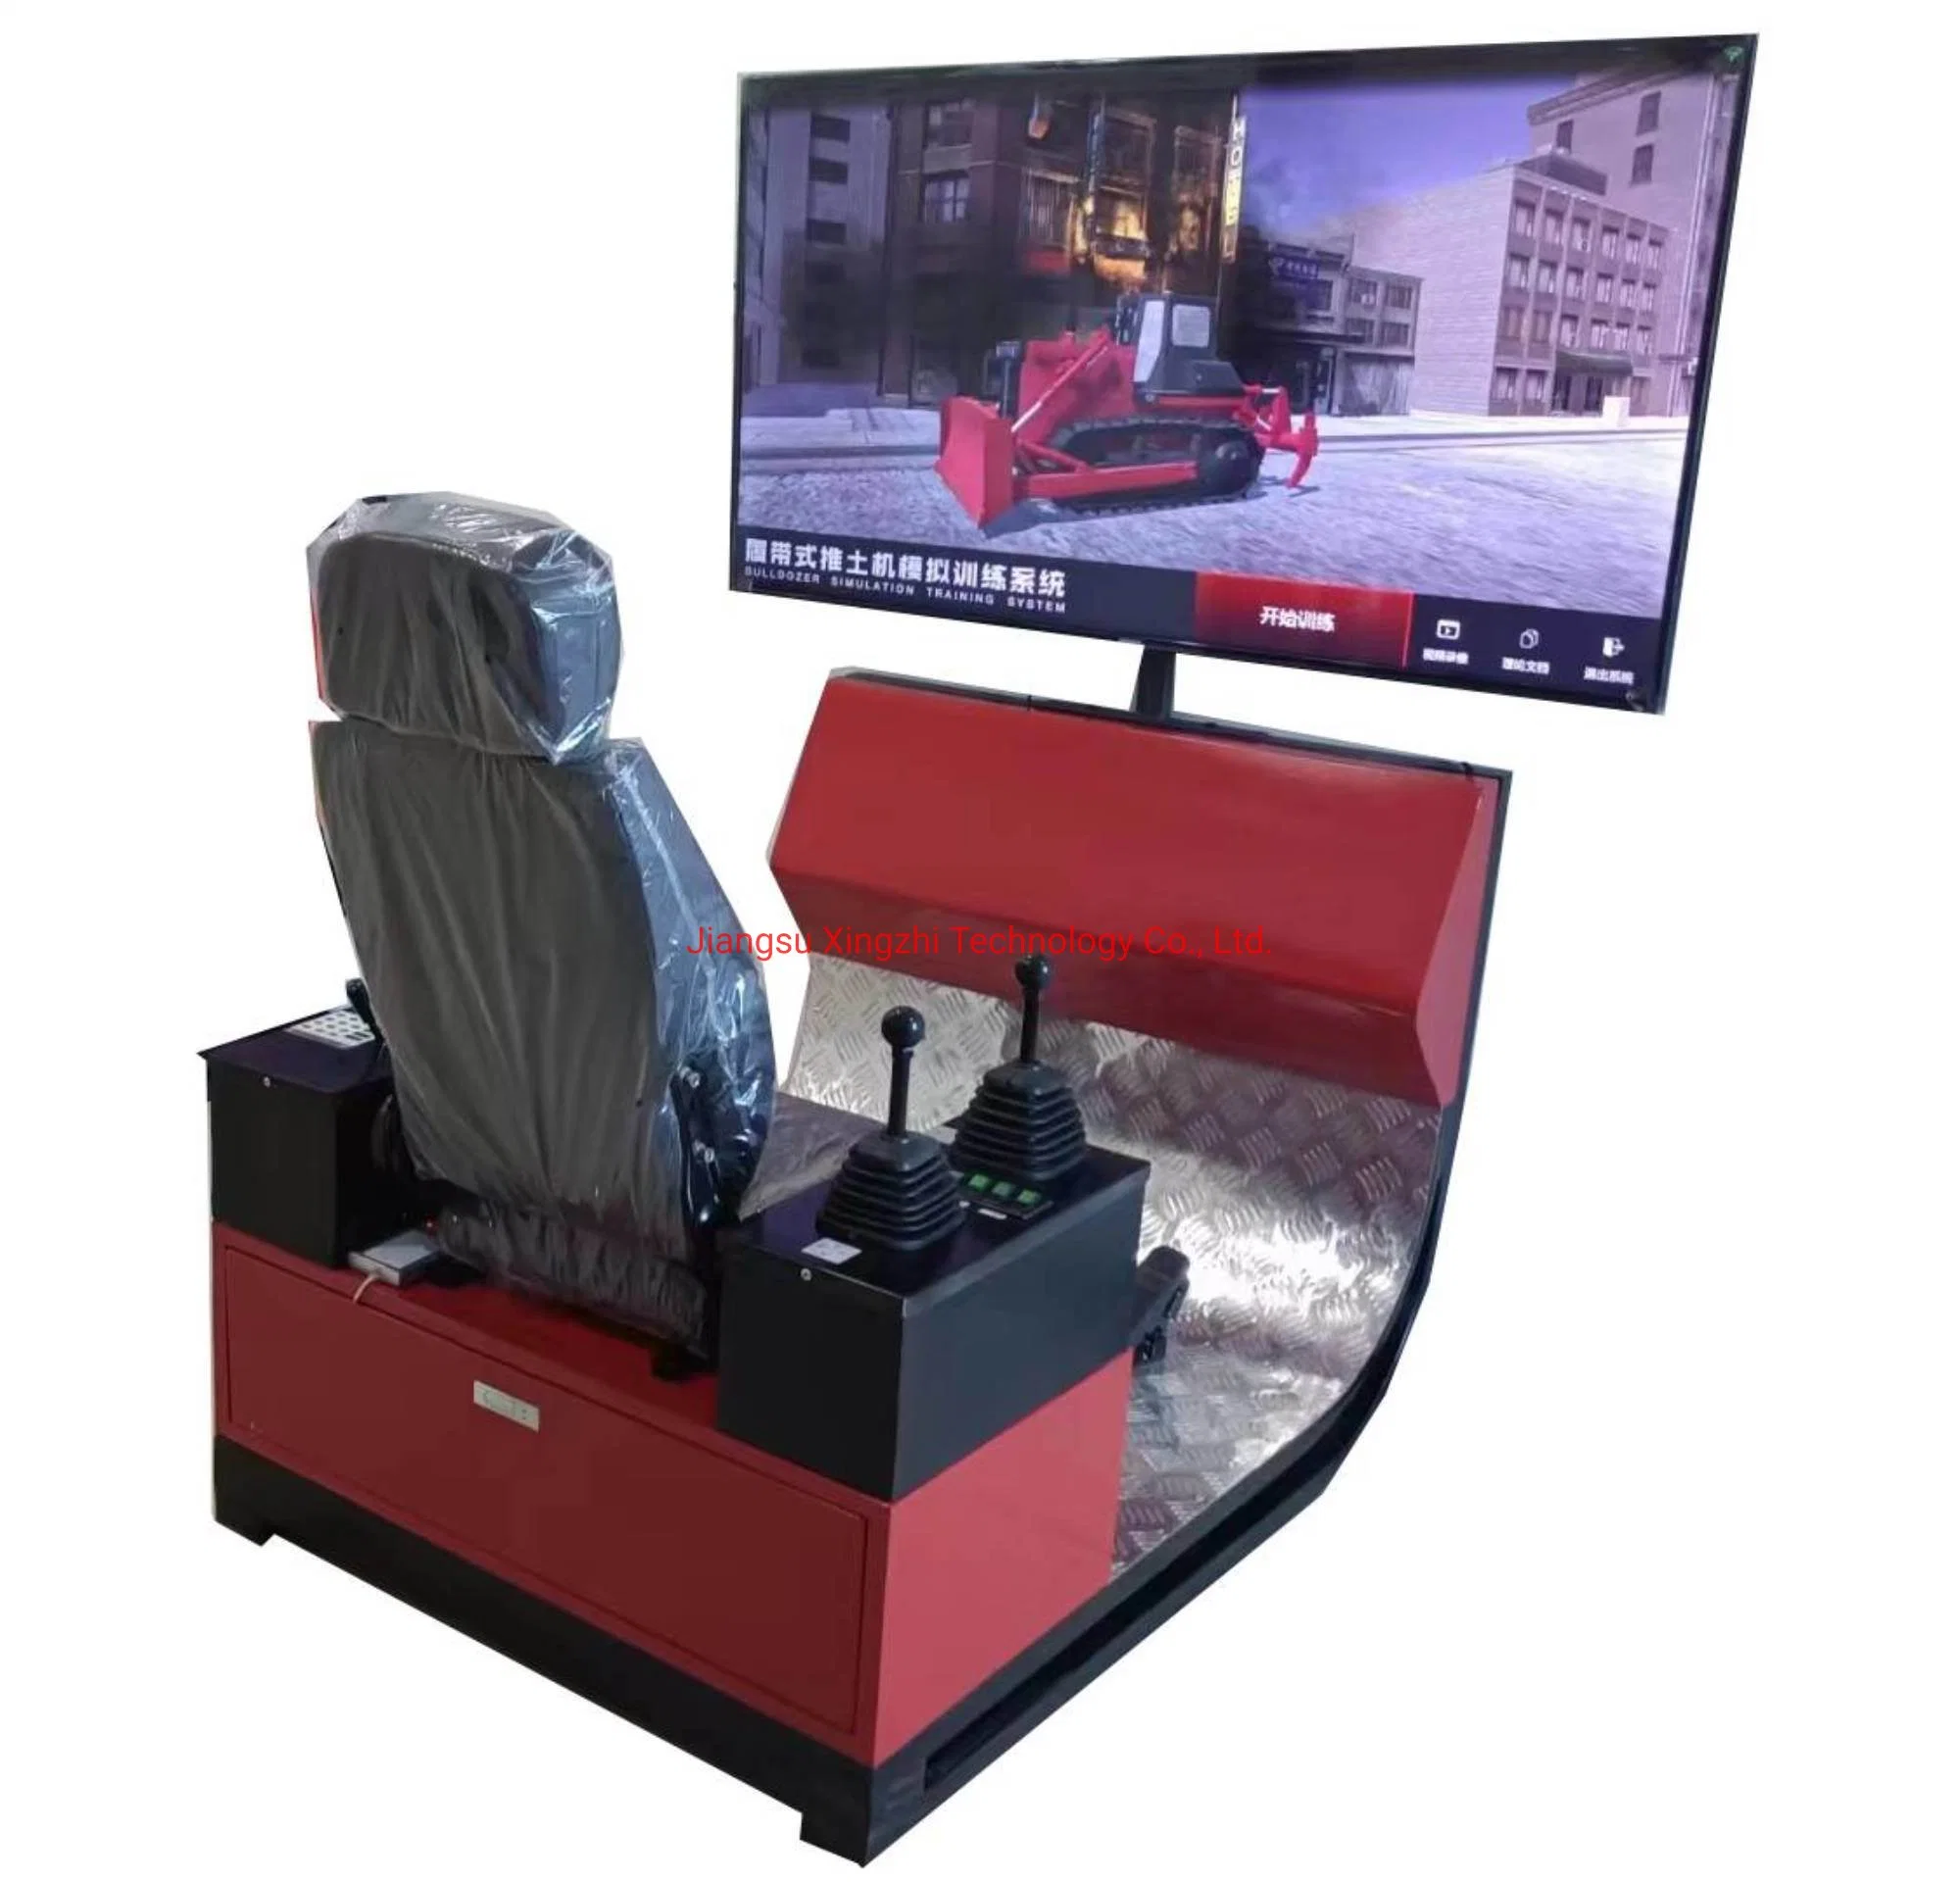 Chinese Bulldozer Simulators Dozer Construction Simulators Mining Simulators